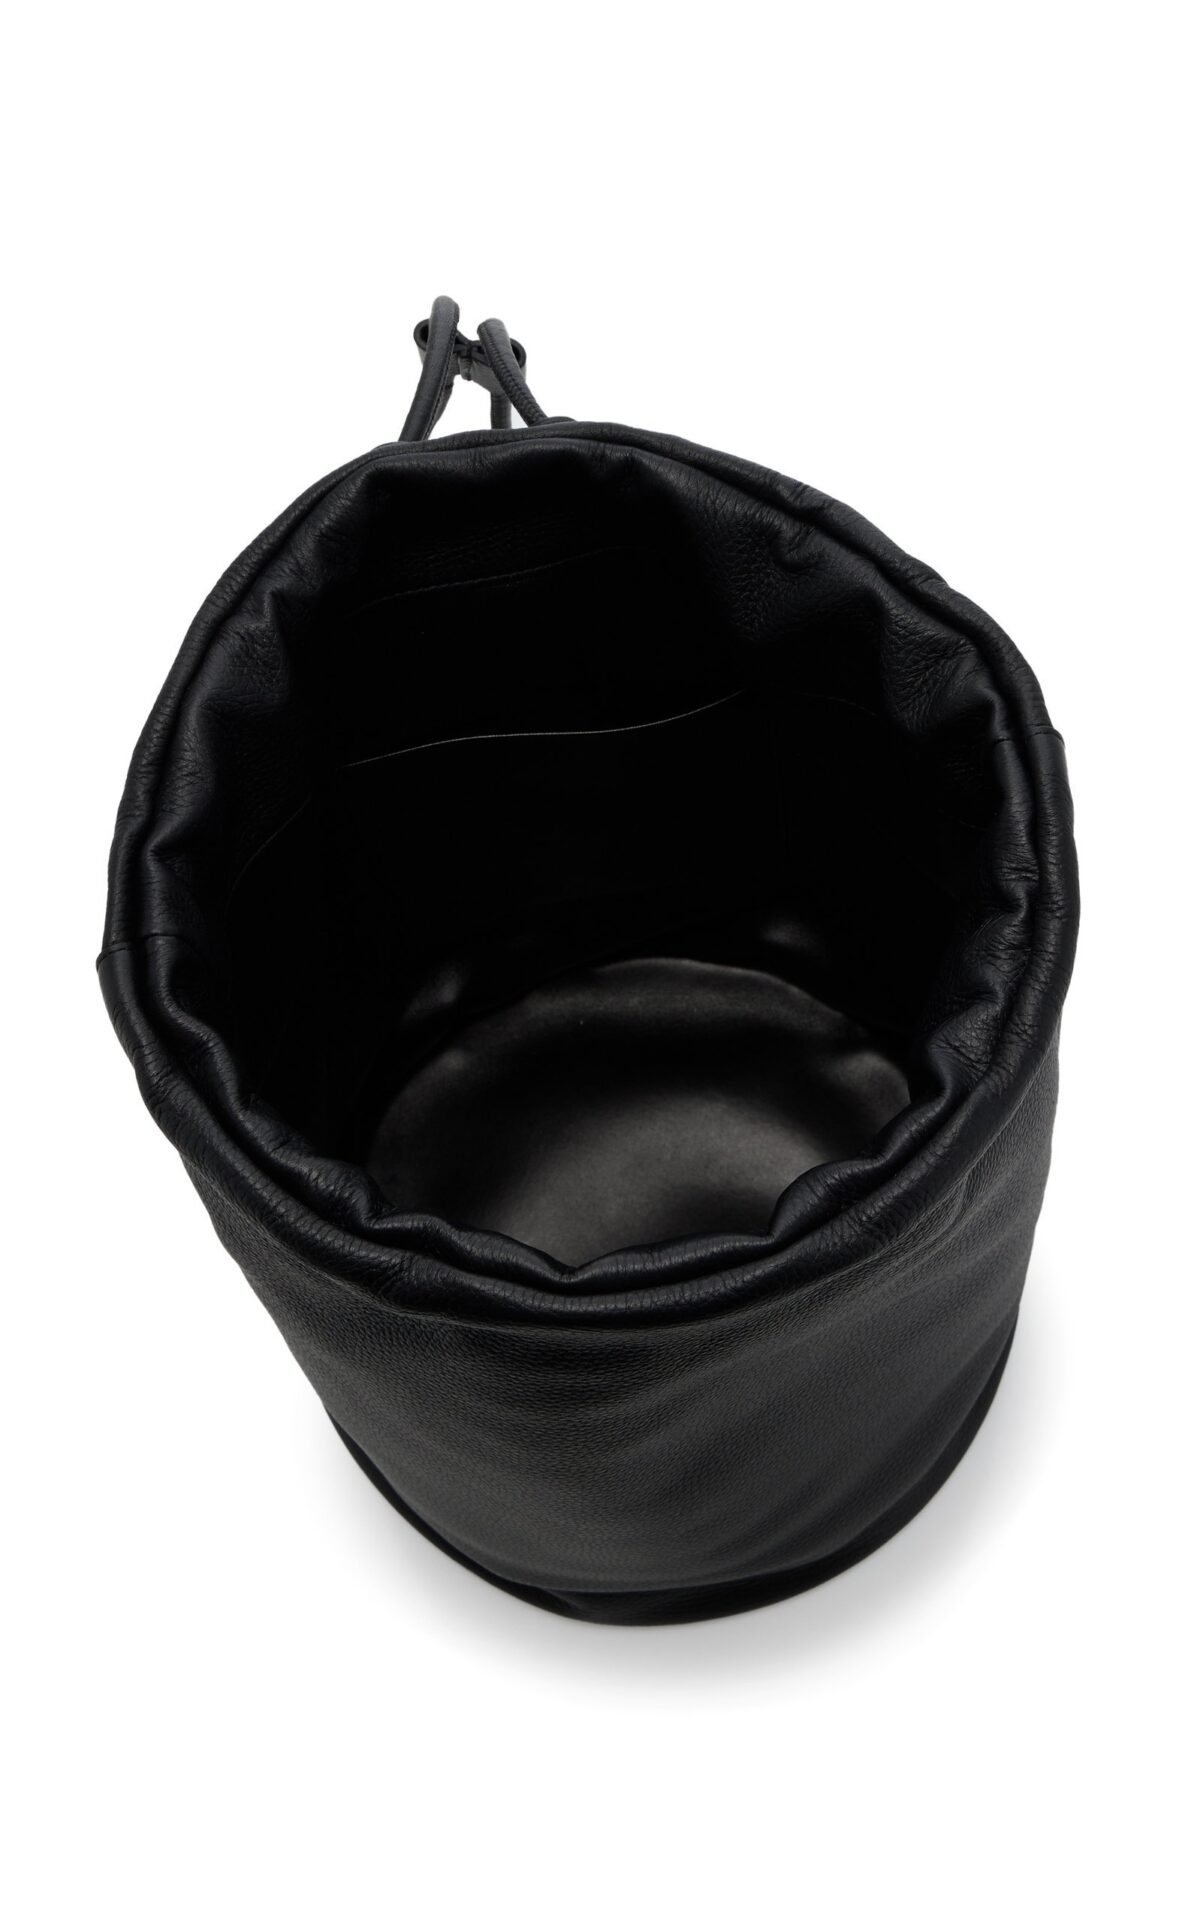 https://jacketsinleather.com/product/sporty-leather-backpack/